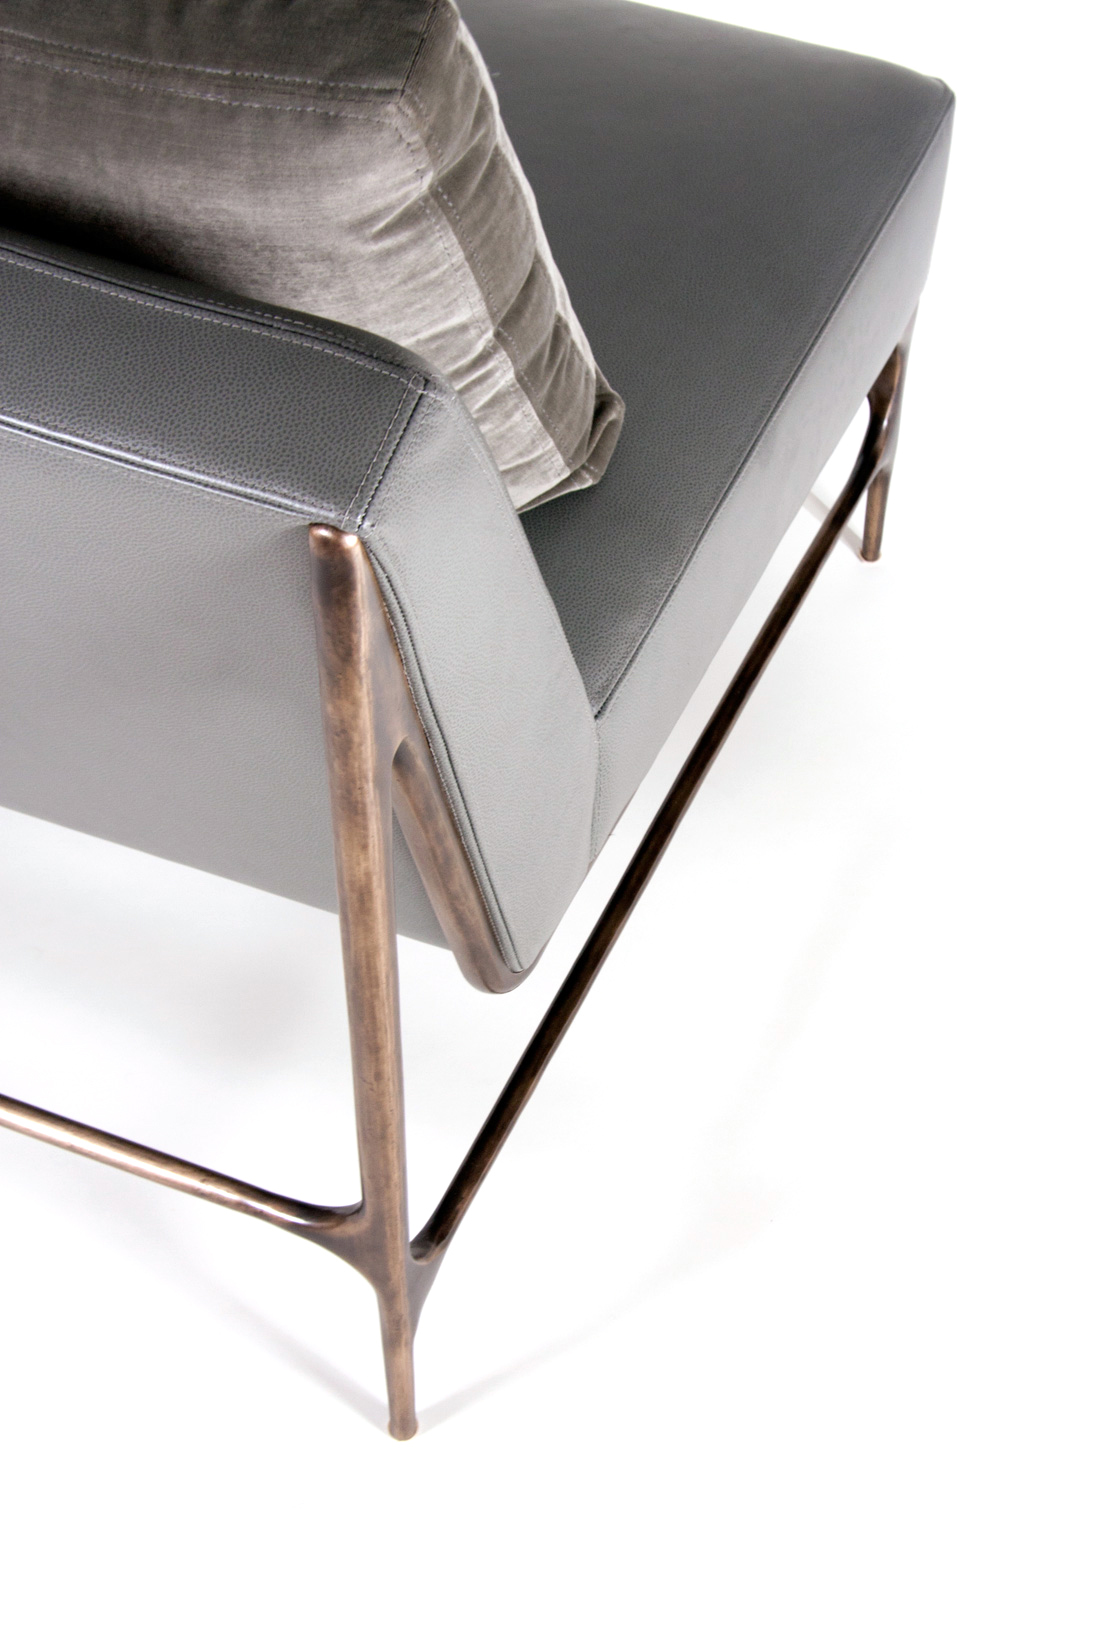 ELLIOT-EAKIN-Furniture-Crane-Slipper-Chair-Rear-Top-Detail-View.jpg